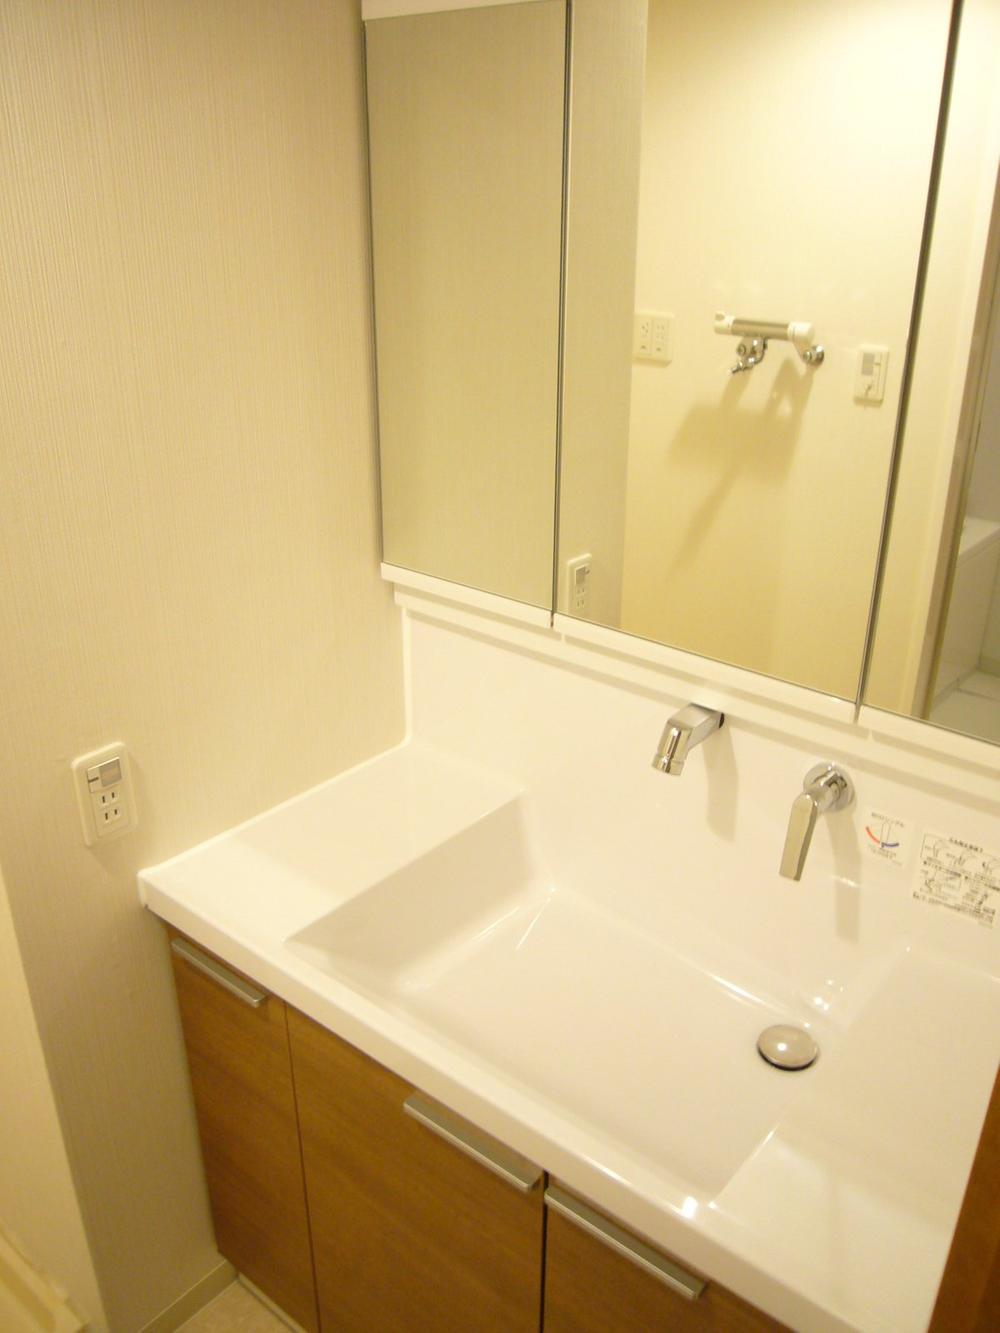 Wash basin, toilet. H25.9 vanity exchange